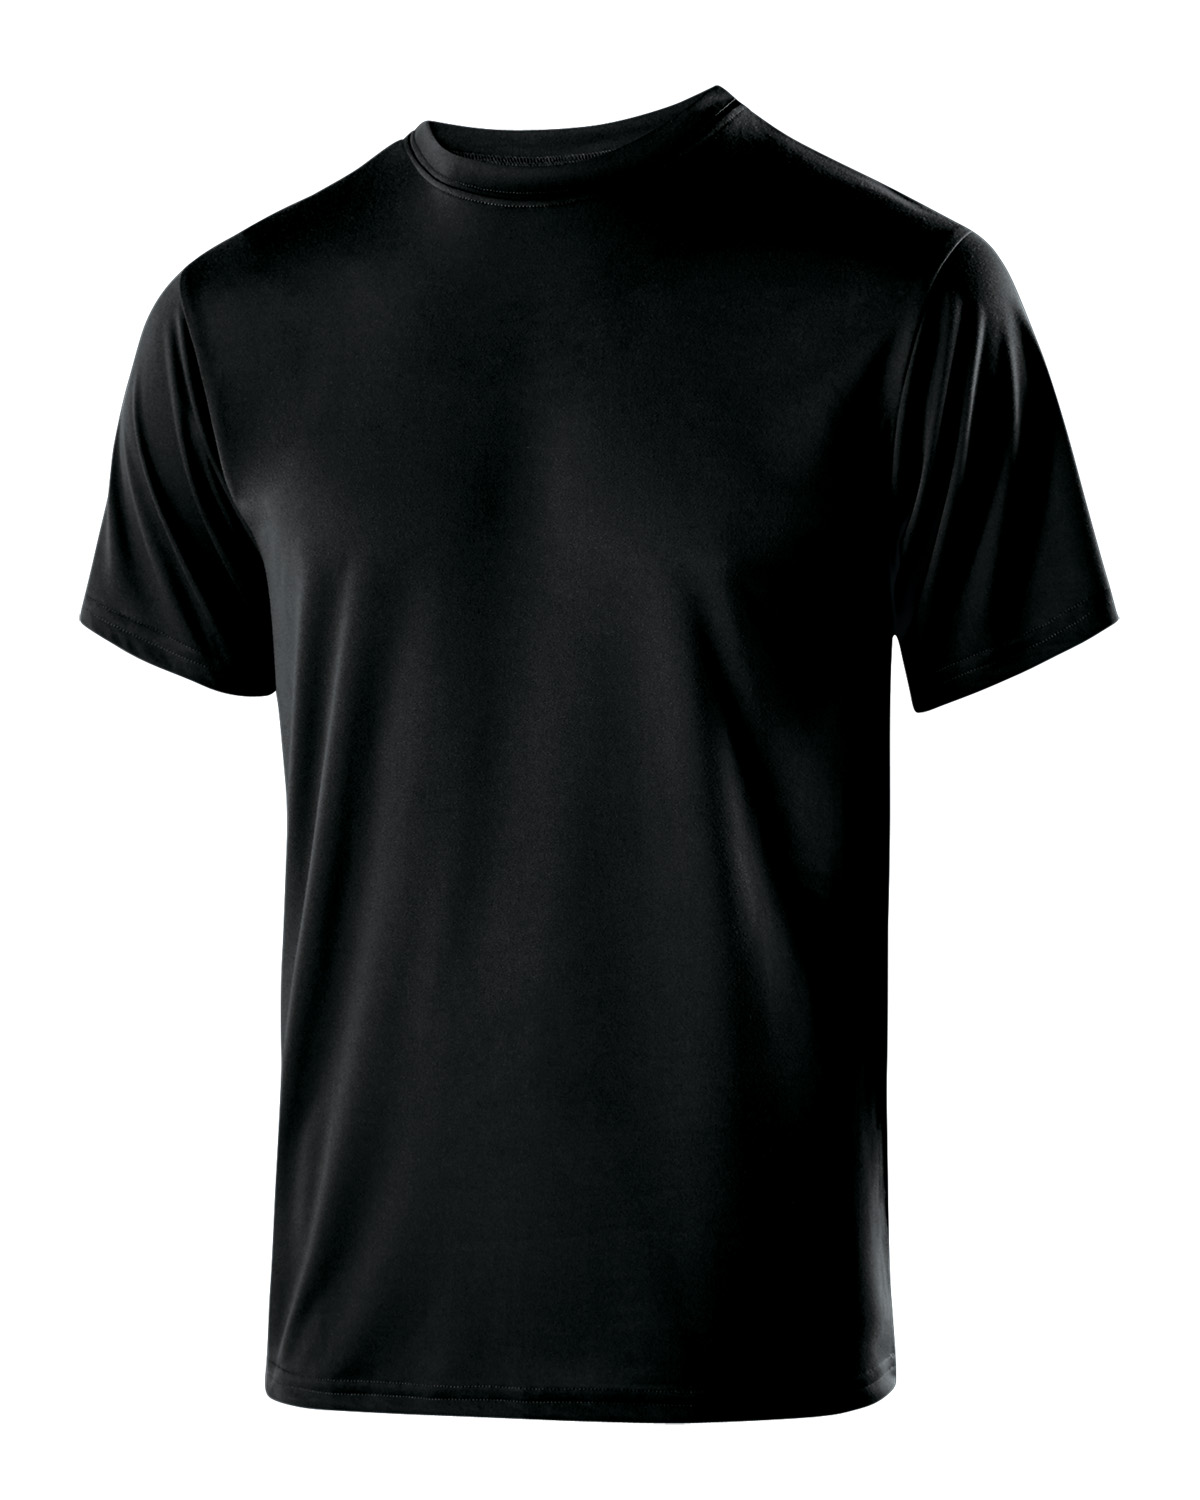 Holloway 222623 - Youth Polyester Short Sleeve Gauge Shirt